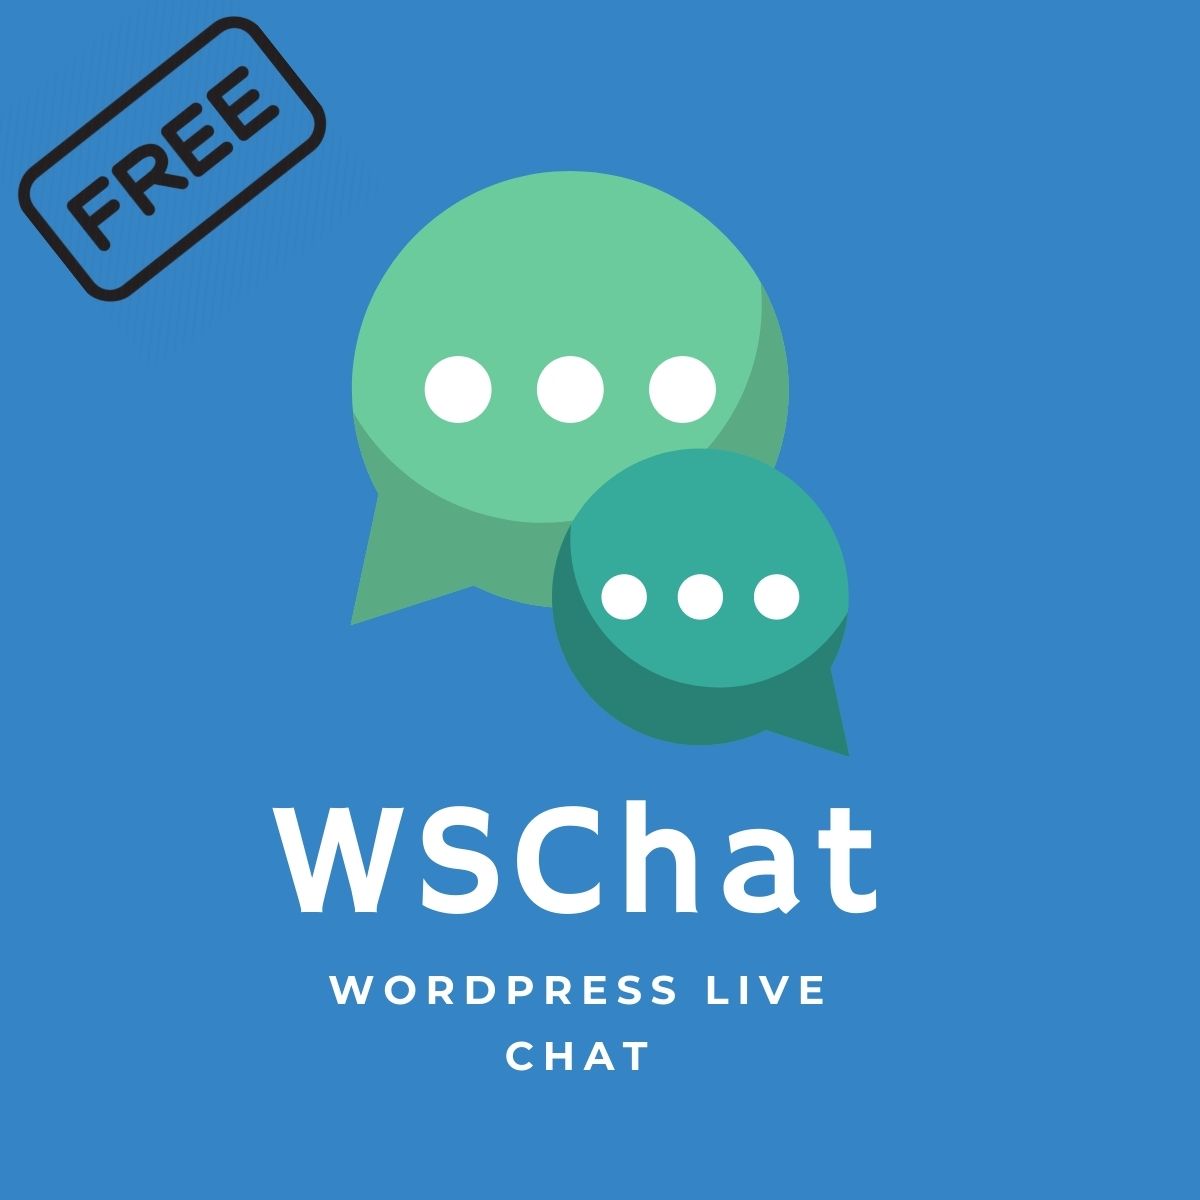 Free live chat plugin 5+ Free